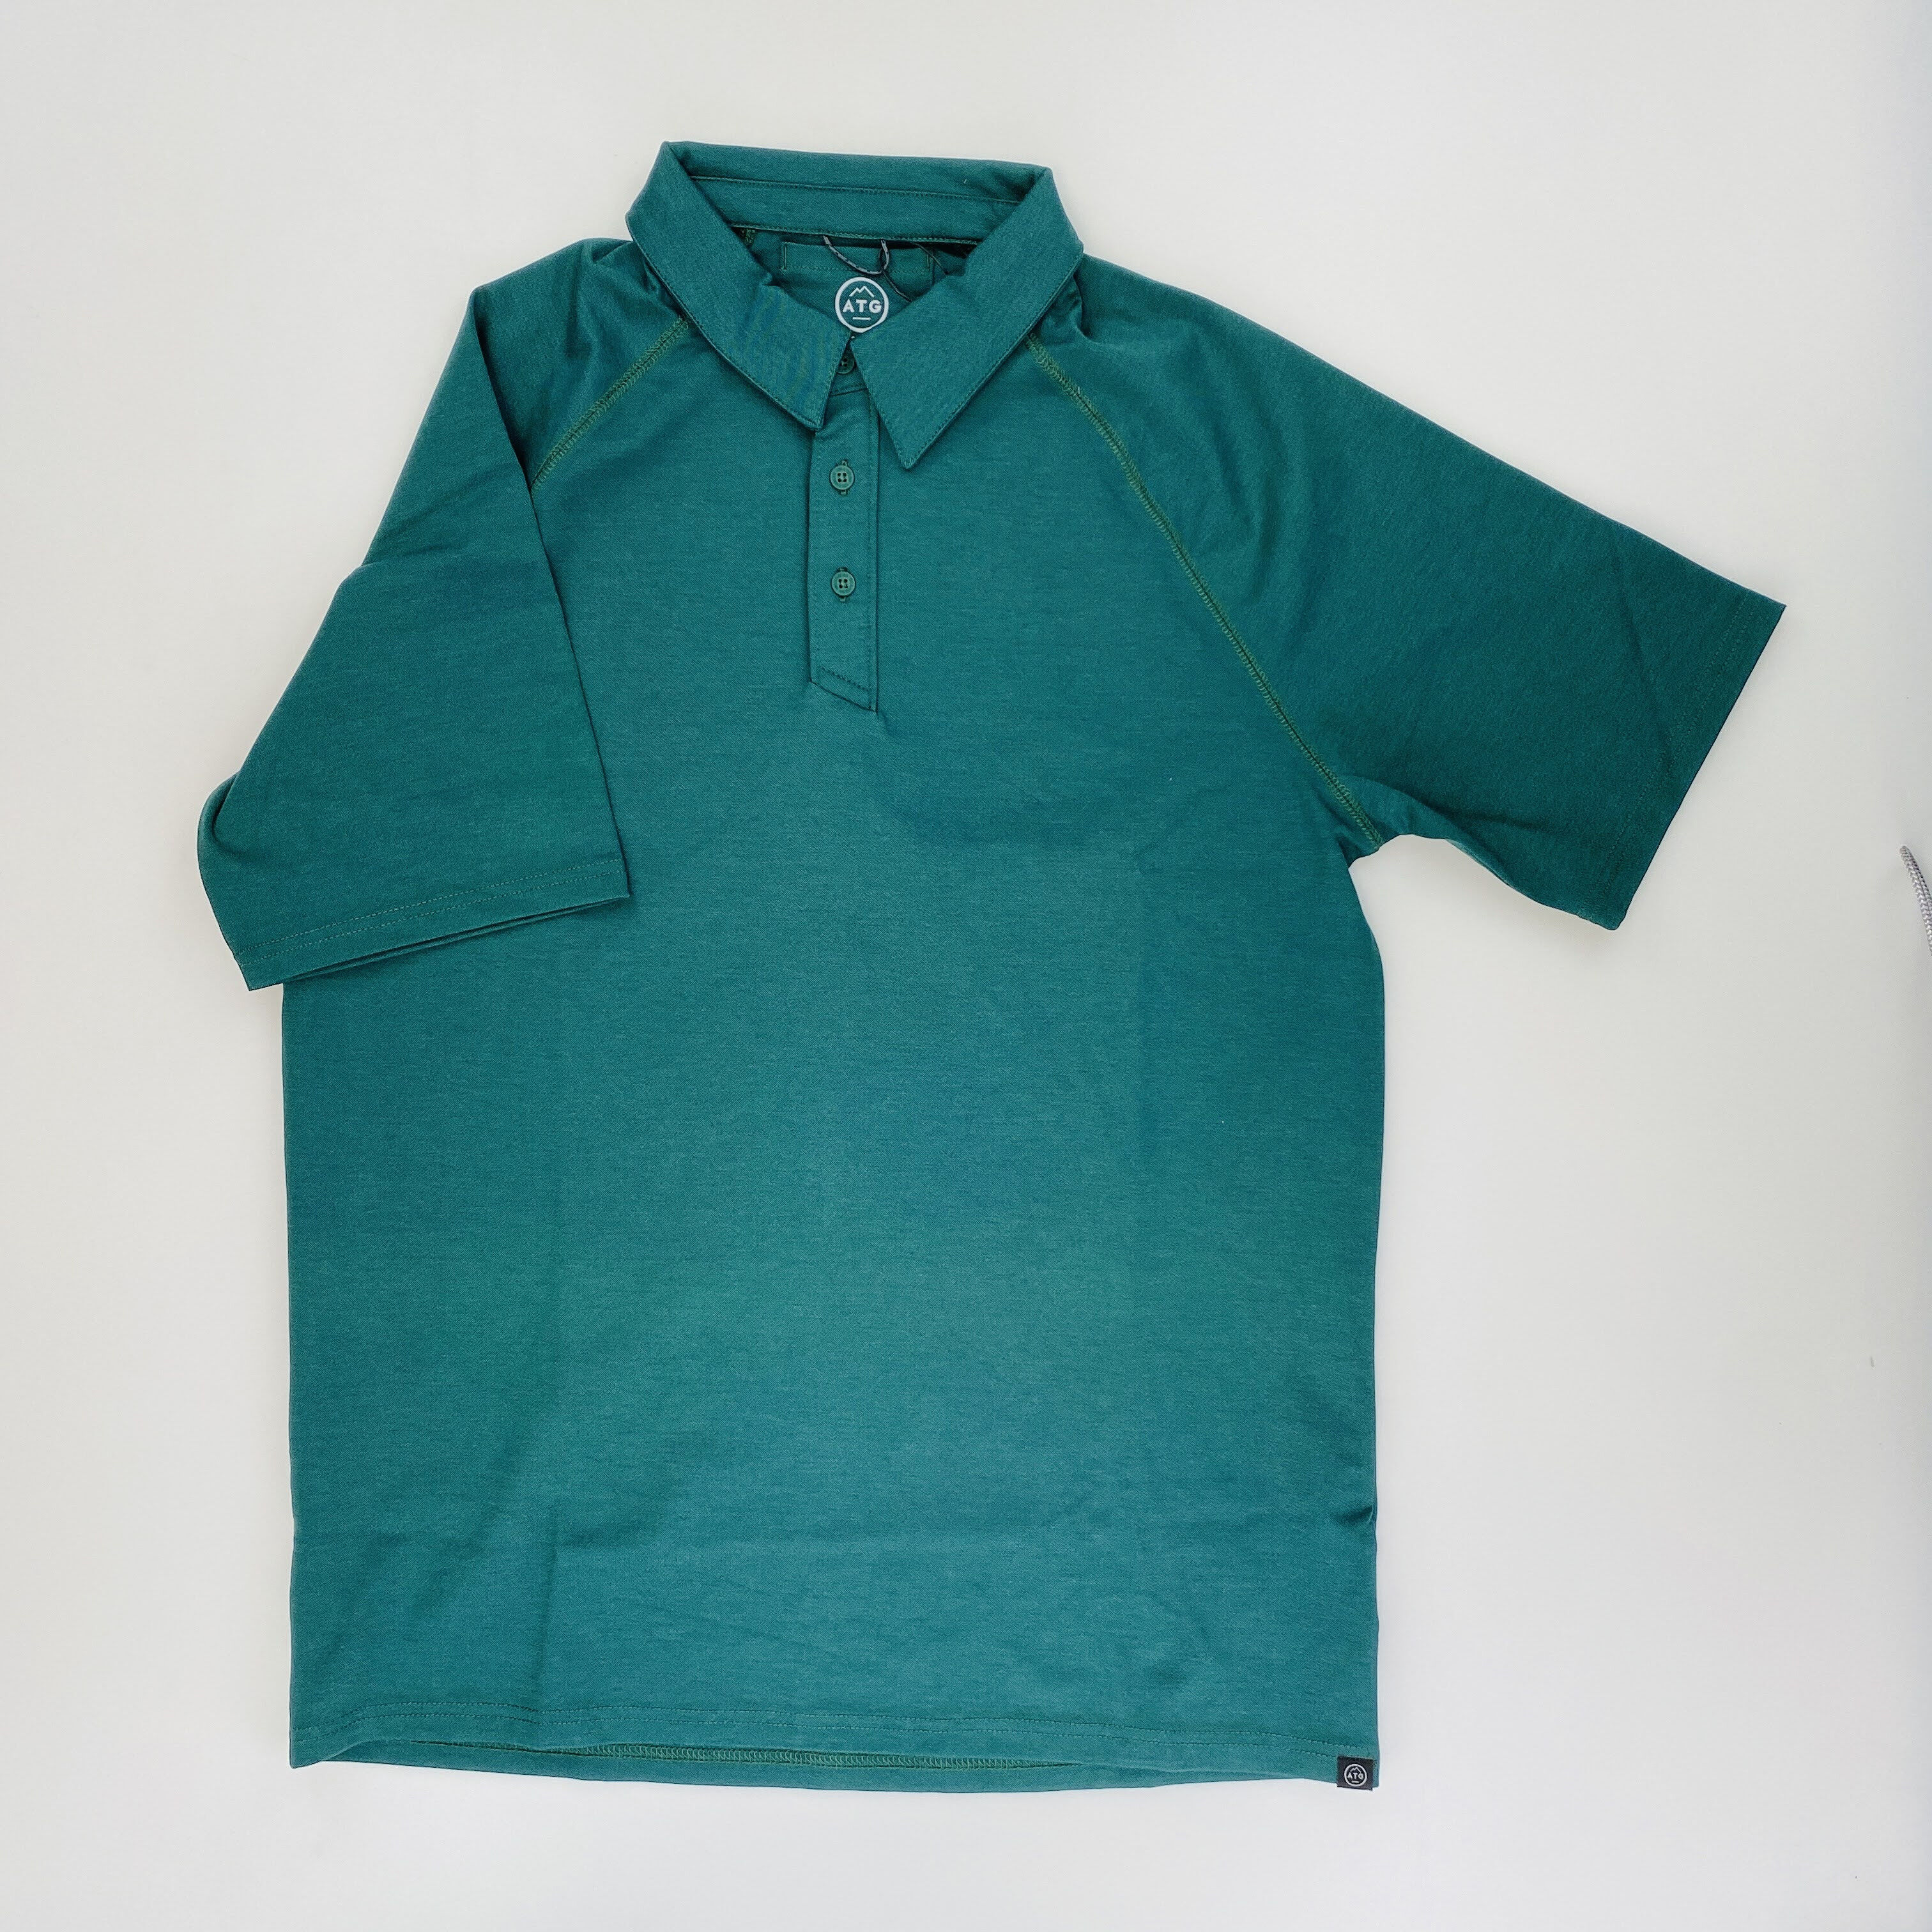 Wrangler Ss Performance Polo - Second Hand Polo shirt - Men's - Green - M | Hardloop